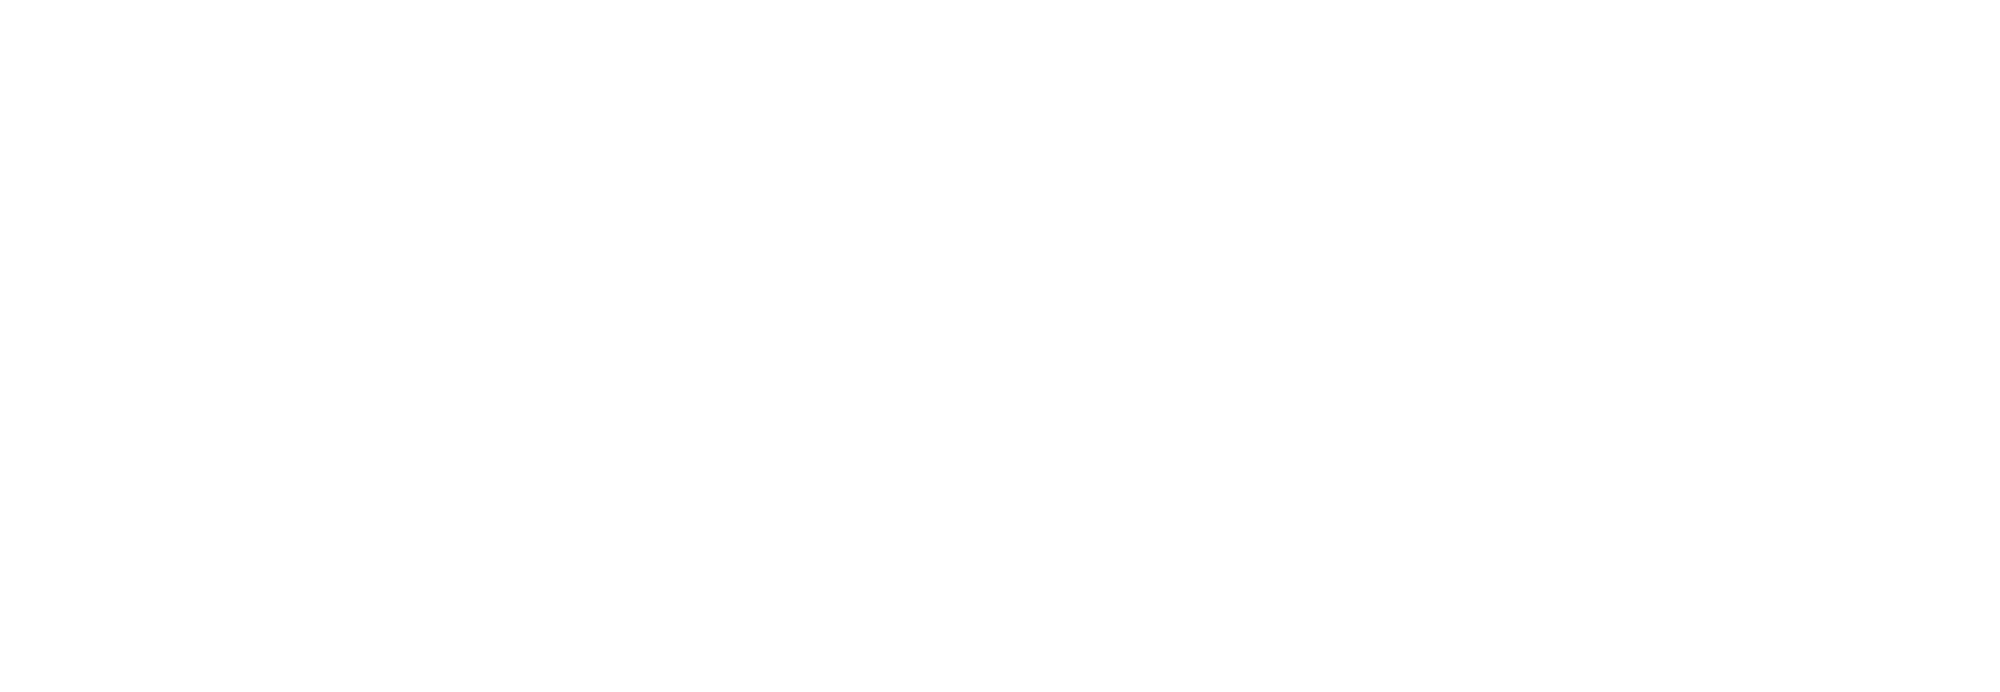 Sodexo white logo